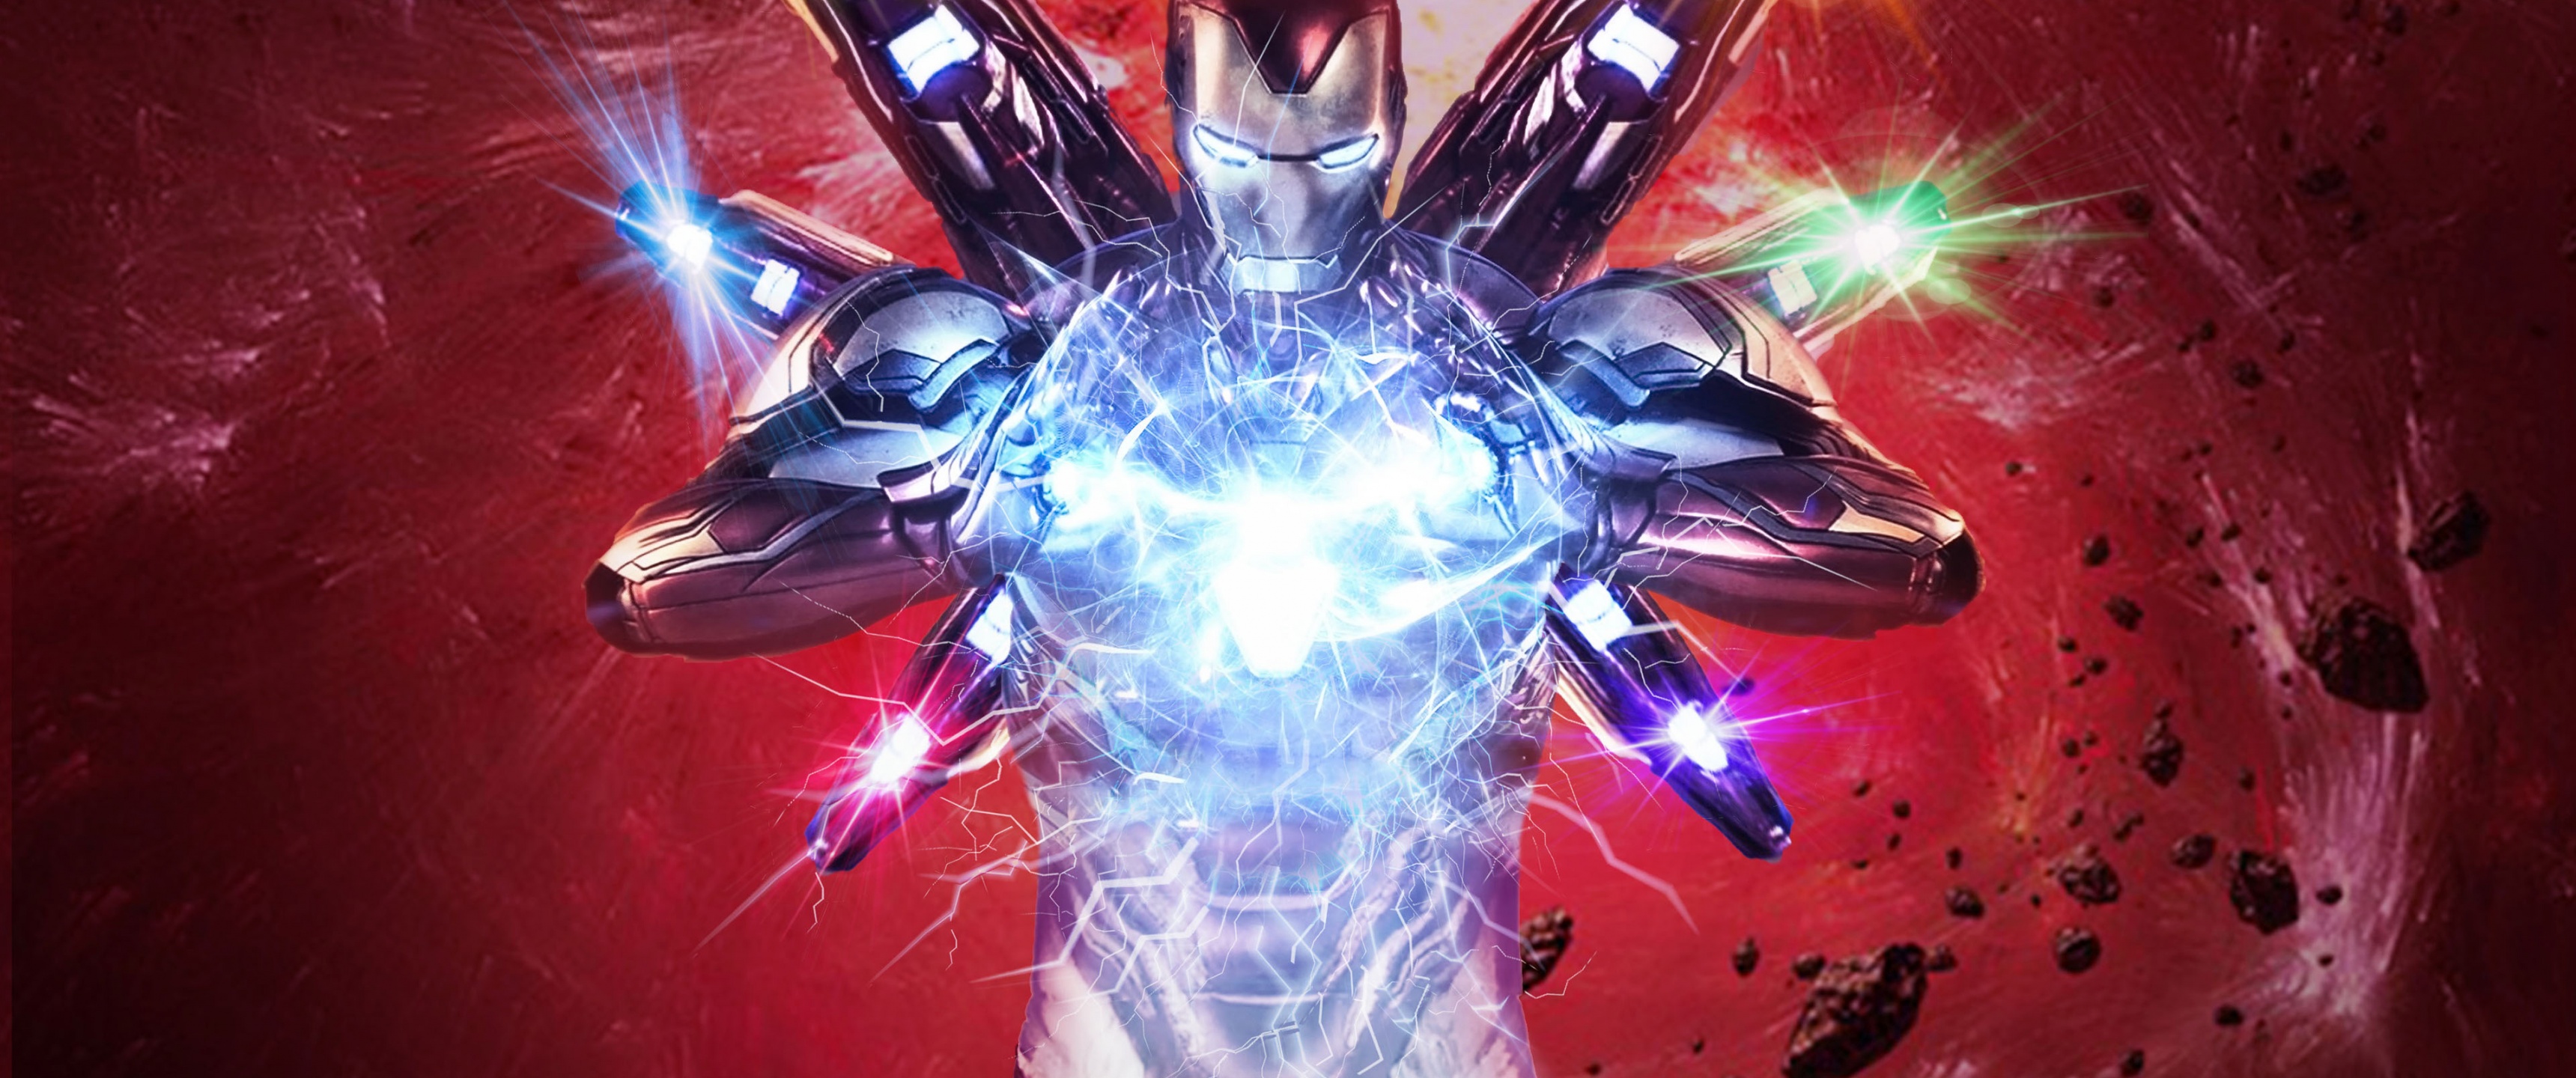 Iron Man Wallpaper 4K, Avengers: Infinity War, Graphics CGI, #585